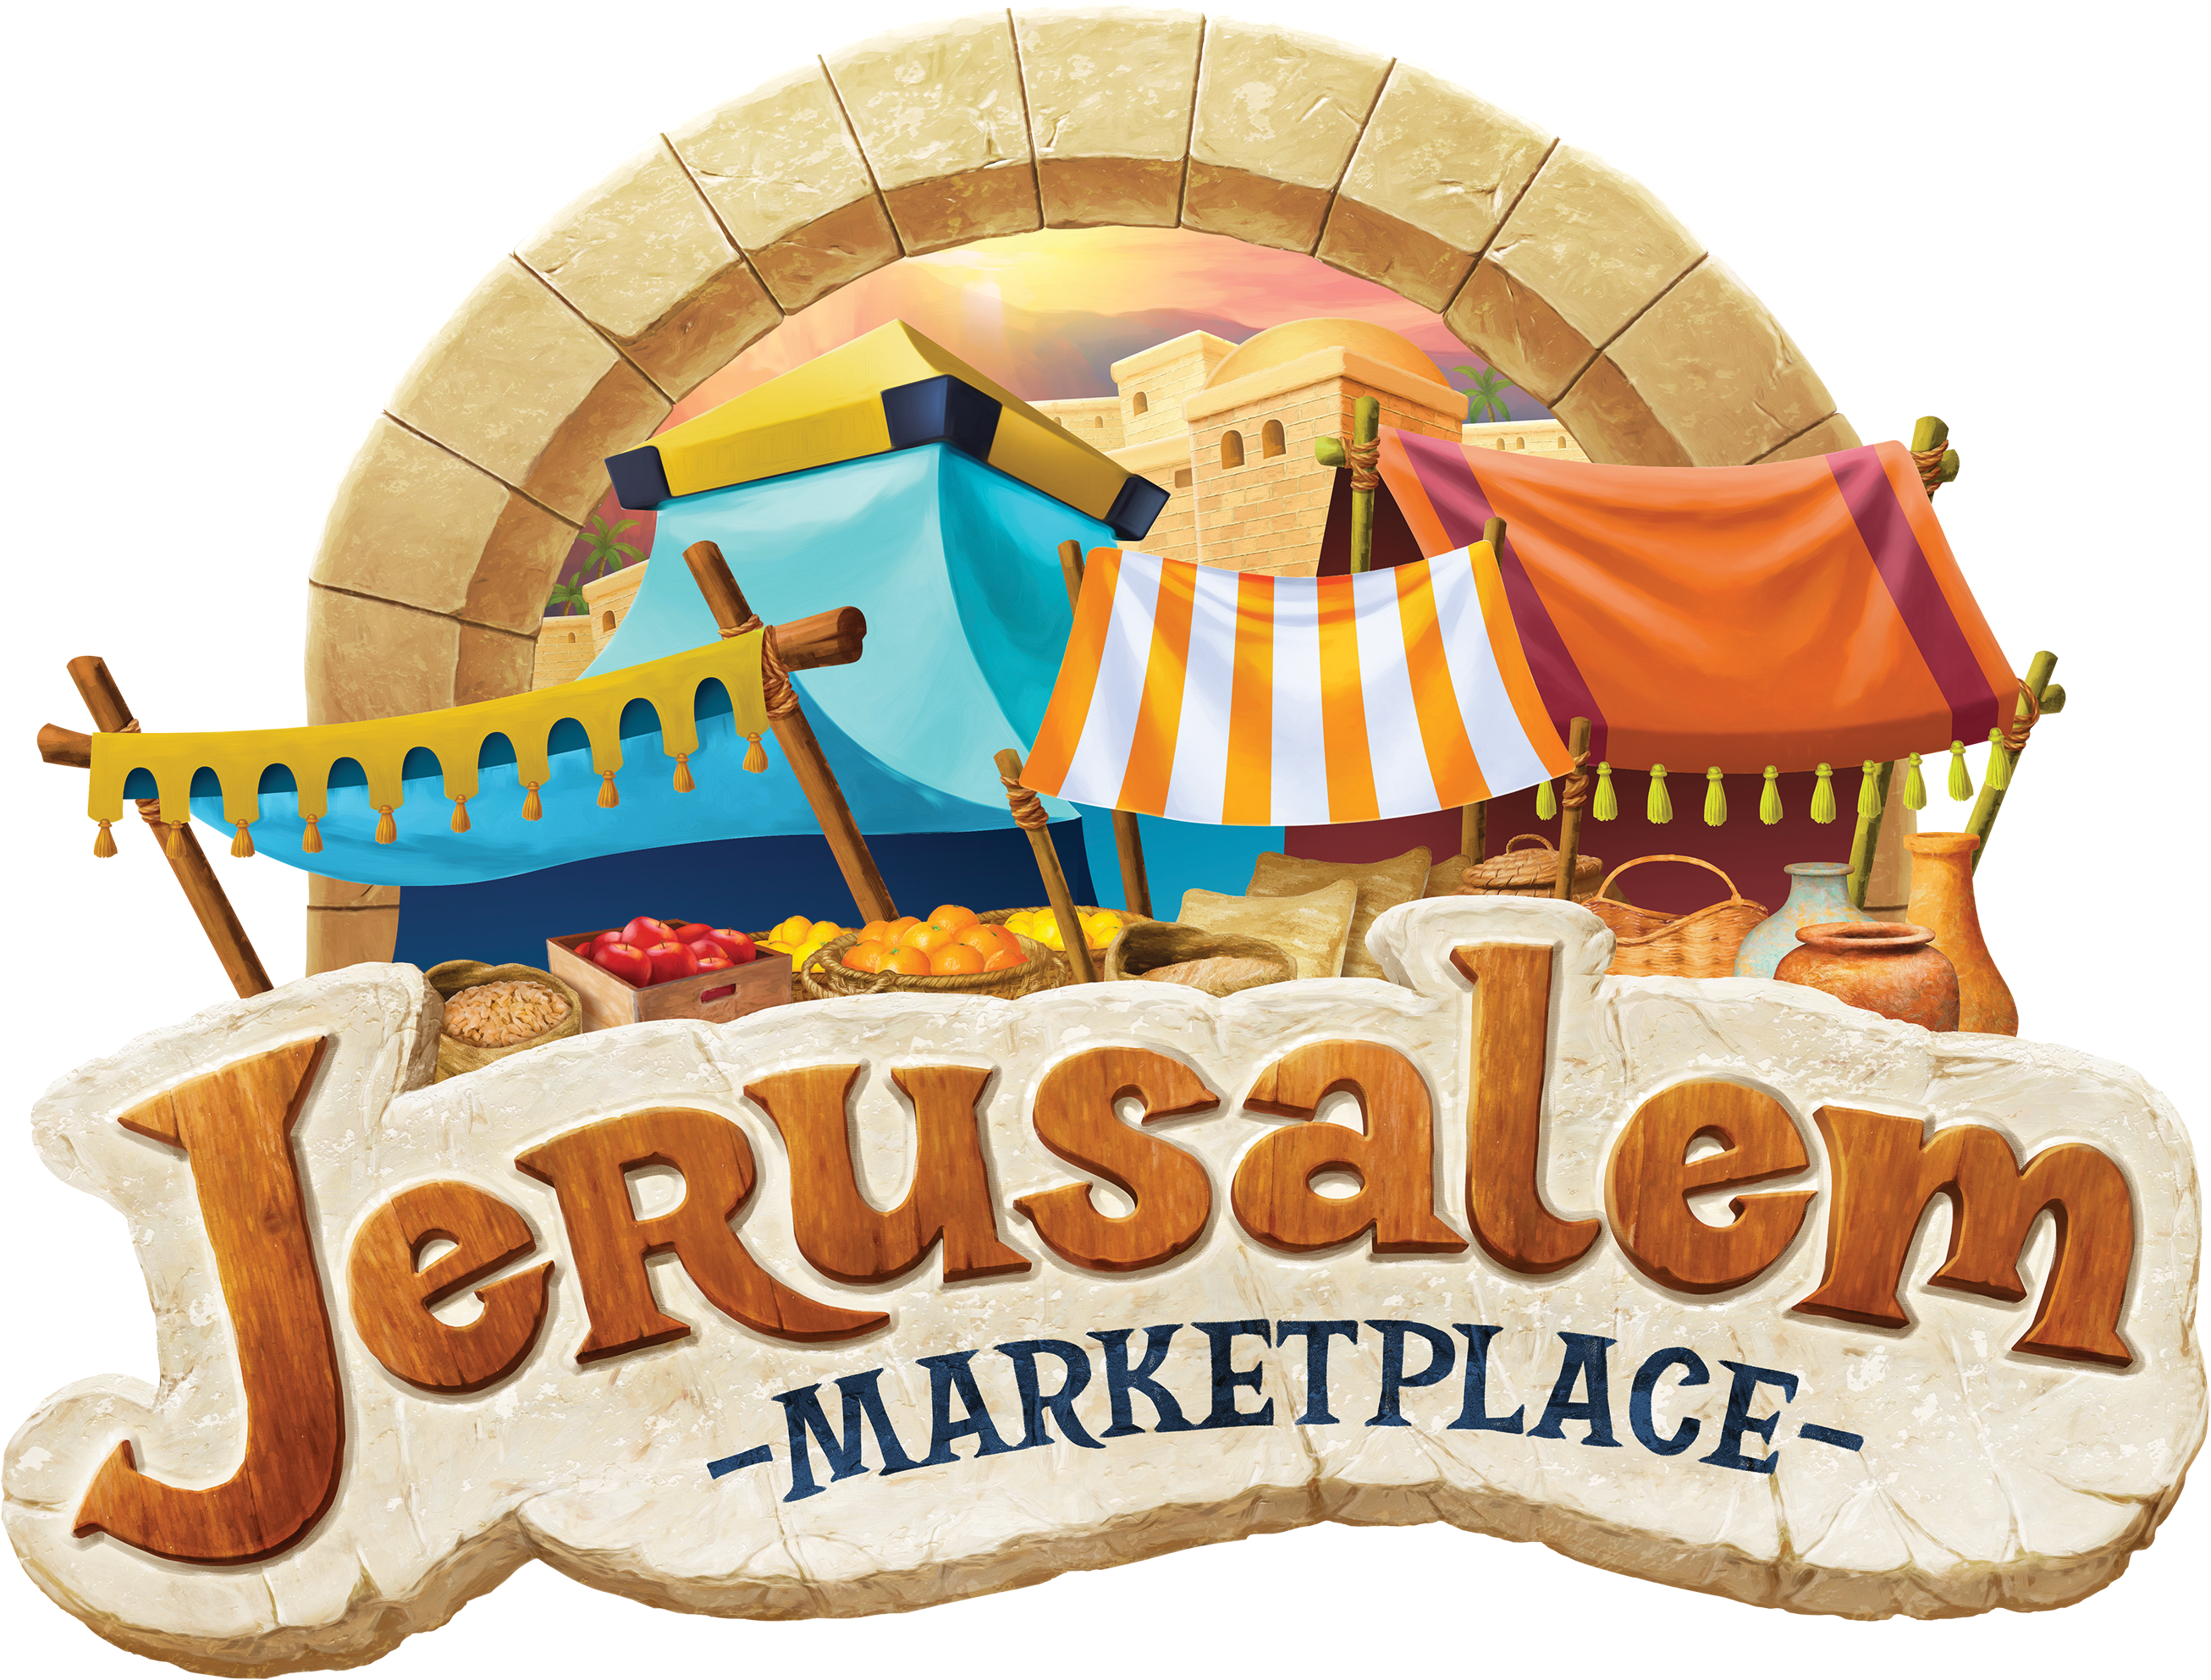 jerusalem-marketplace-vbs-logo-hires-rgb_169